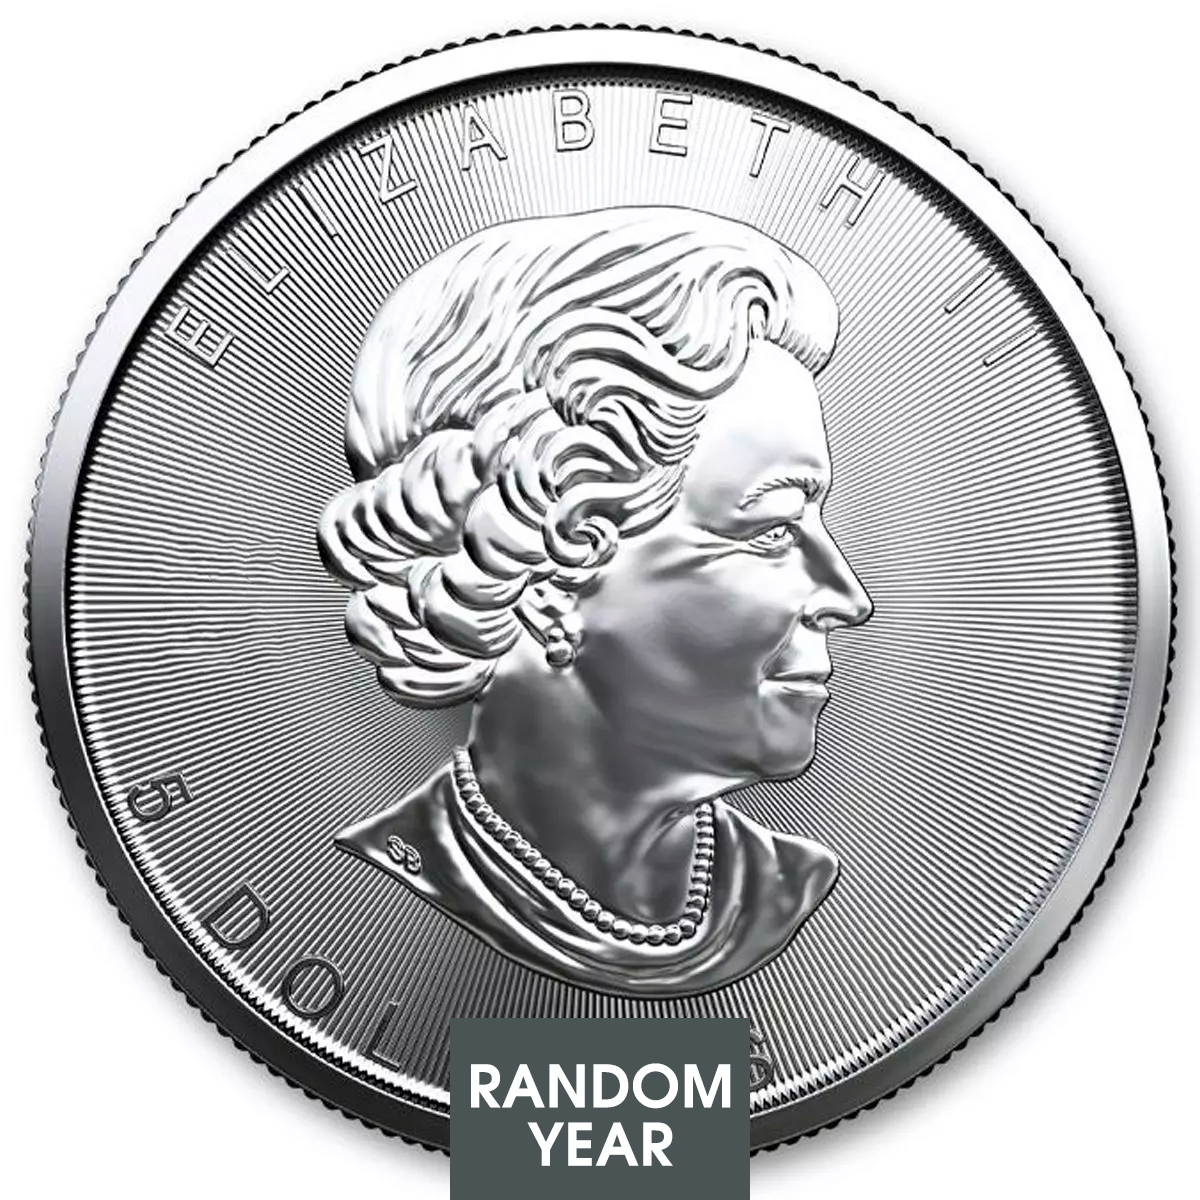 1 oz Silver Coin - Canadian Maple Leaf